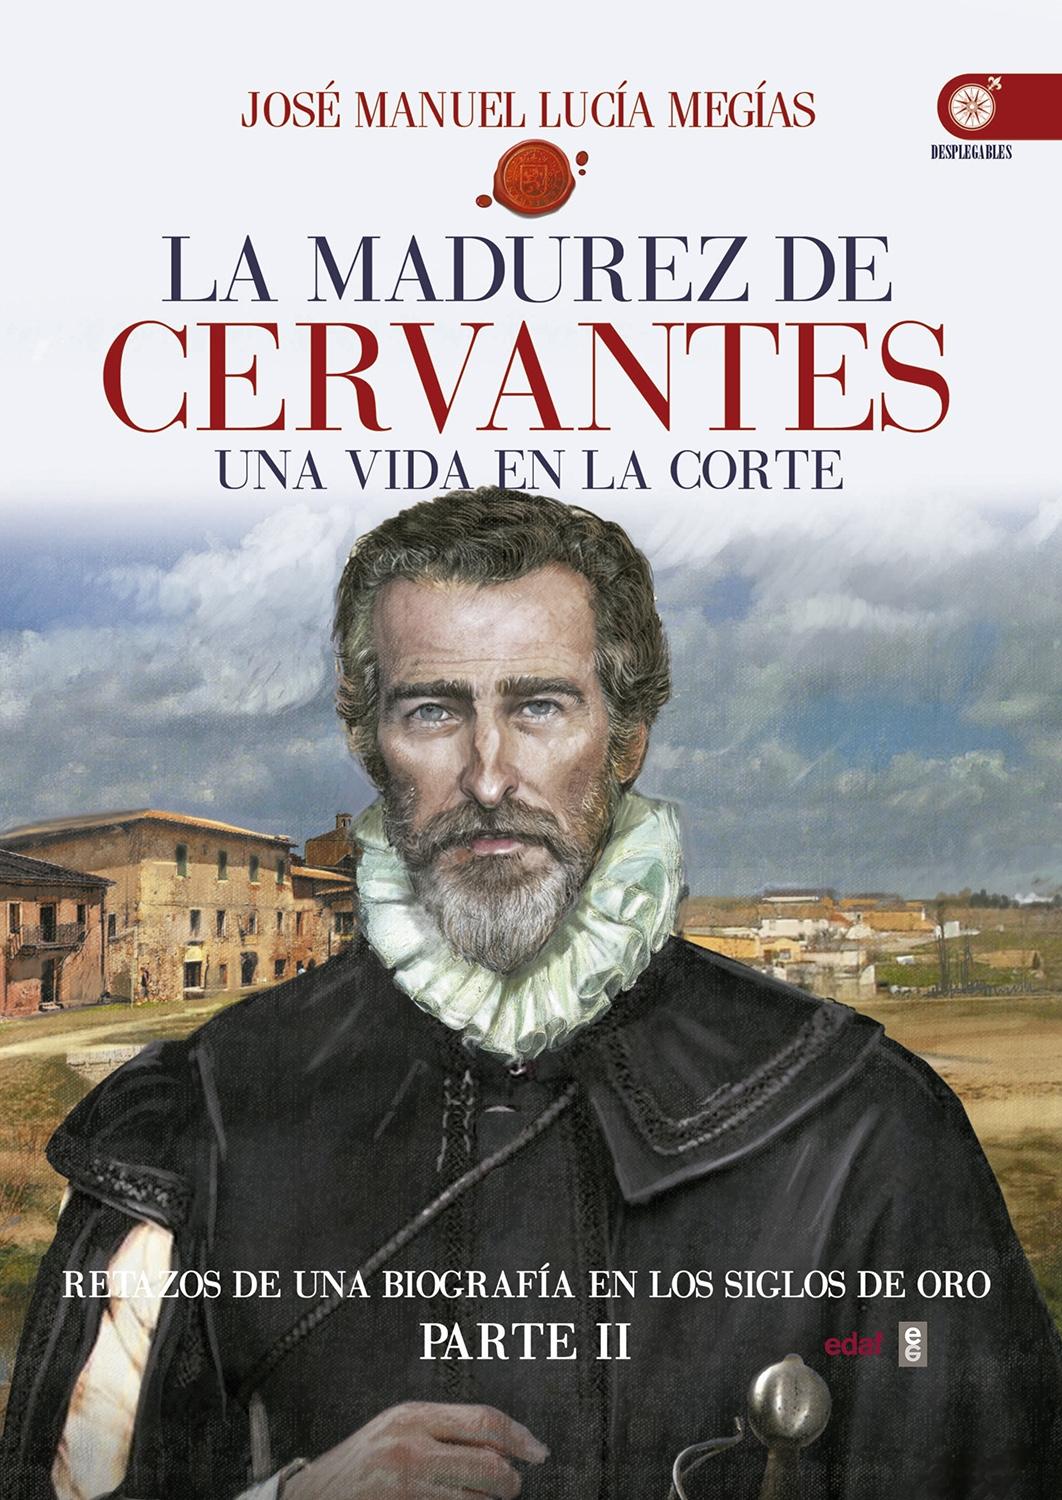 La Madurez de Cervantes "Una Vida en la Corte"